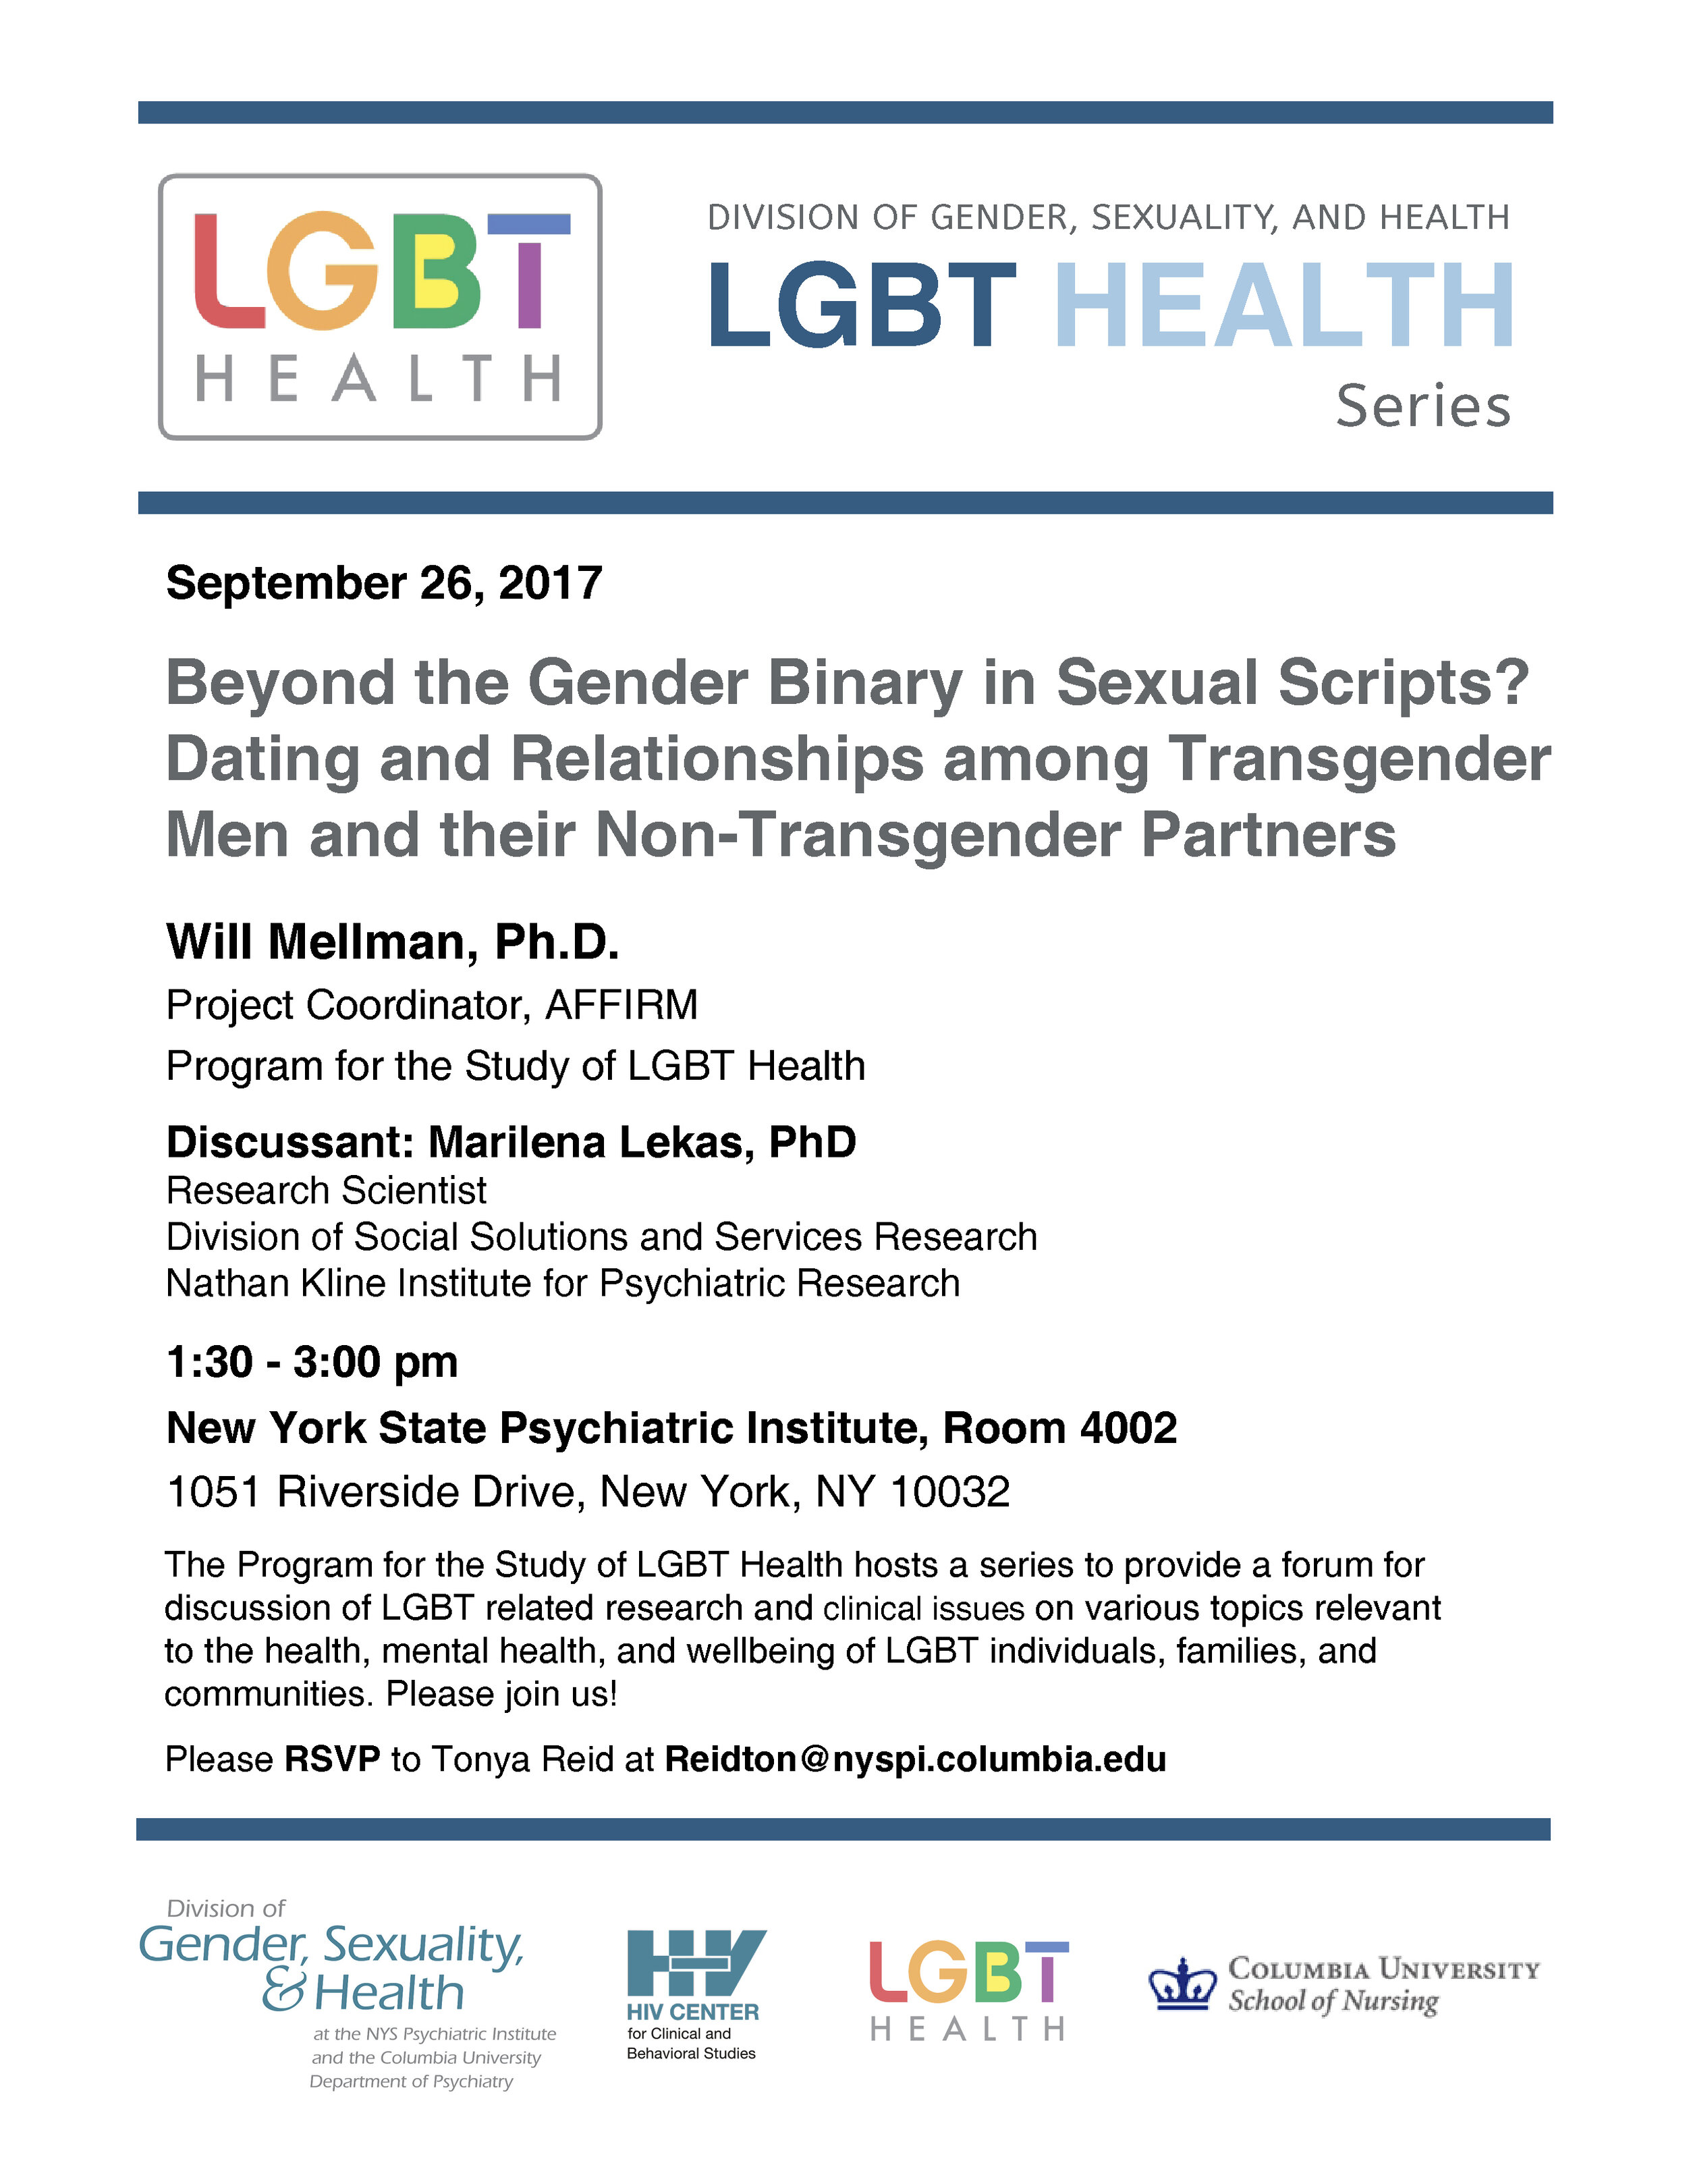 LGBT Health Series Sept 26 2017.jpg